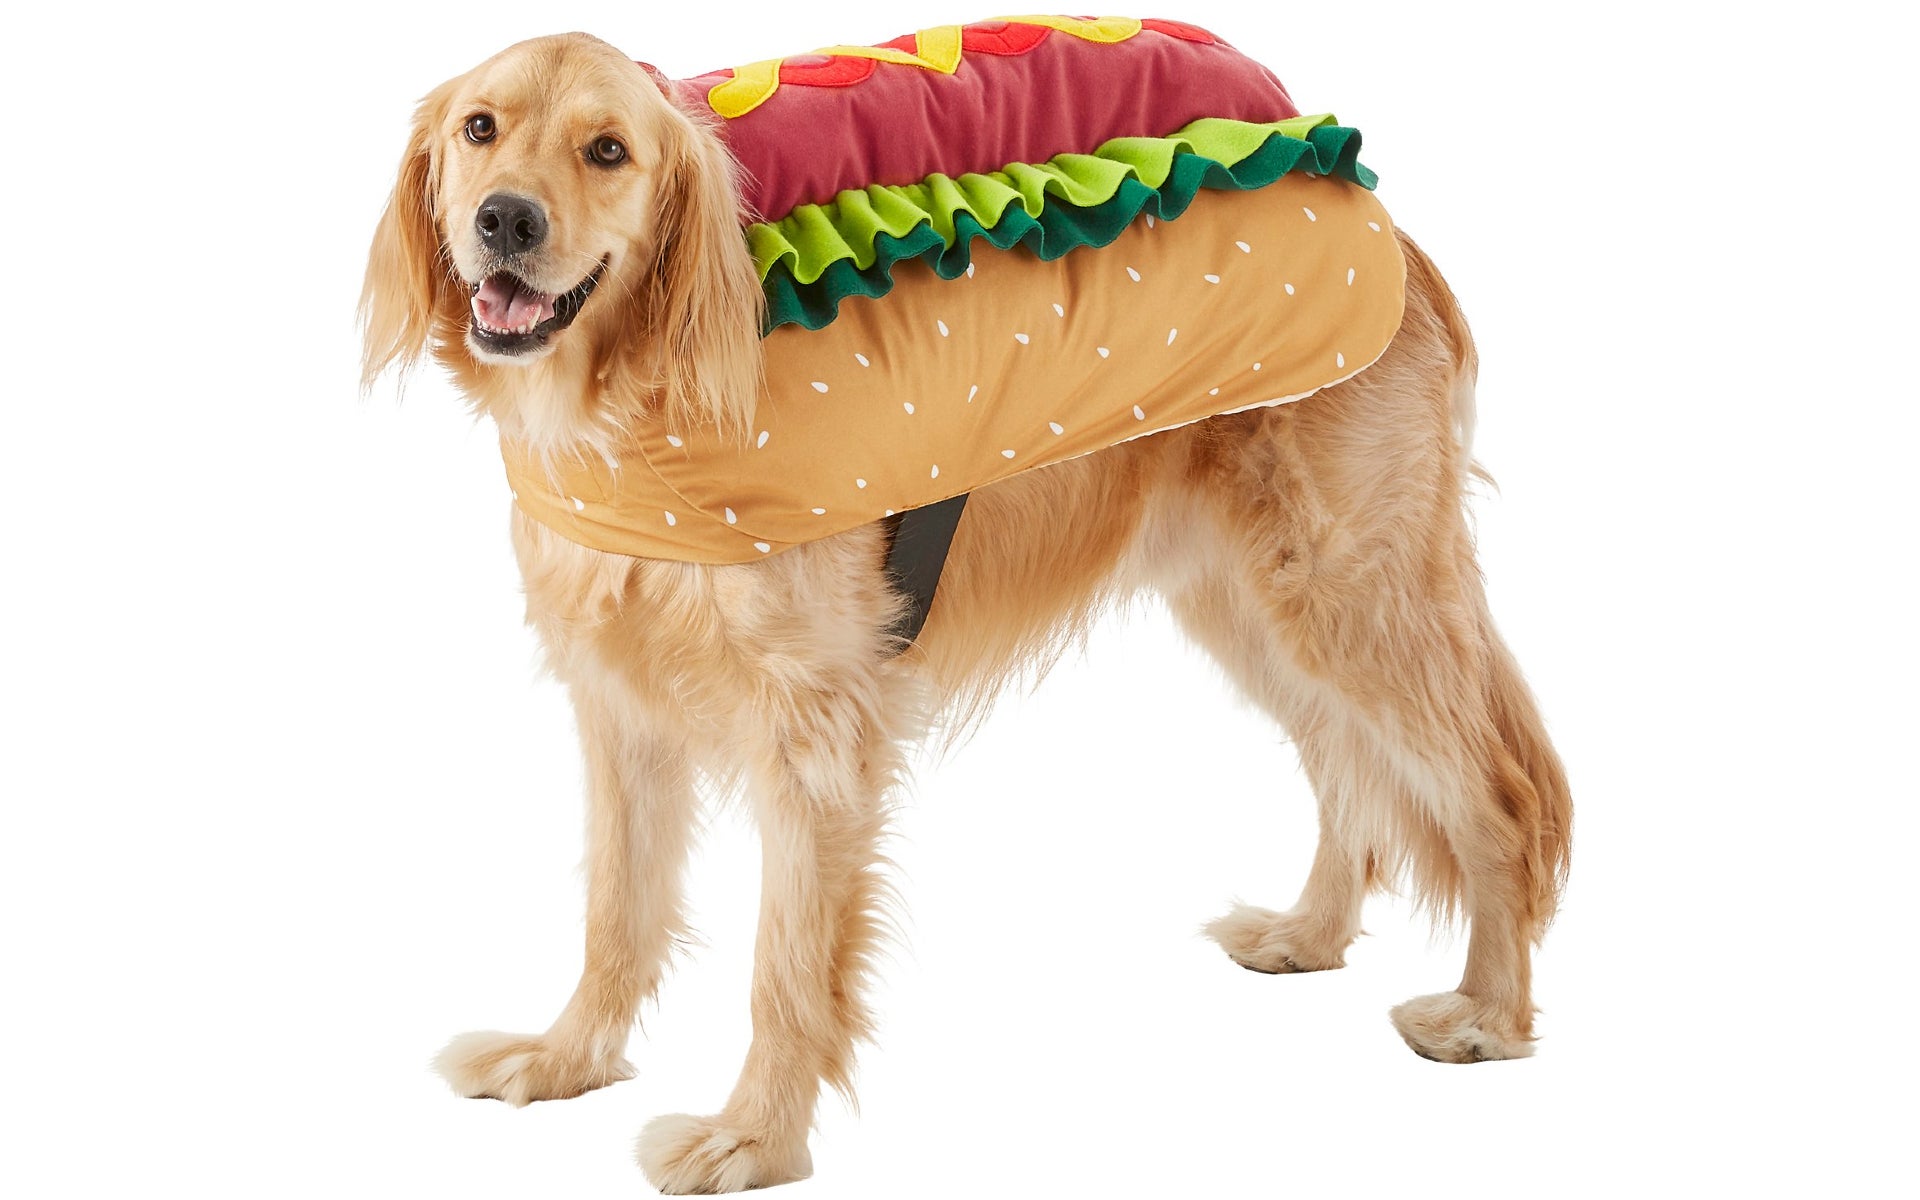 Dog in hotdog costume